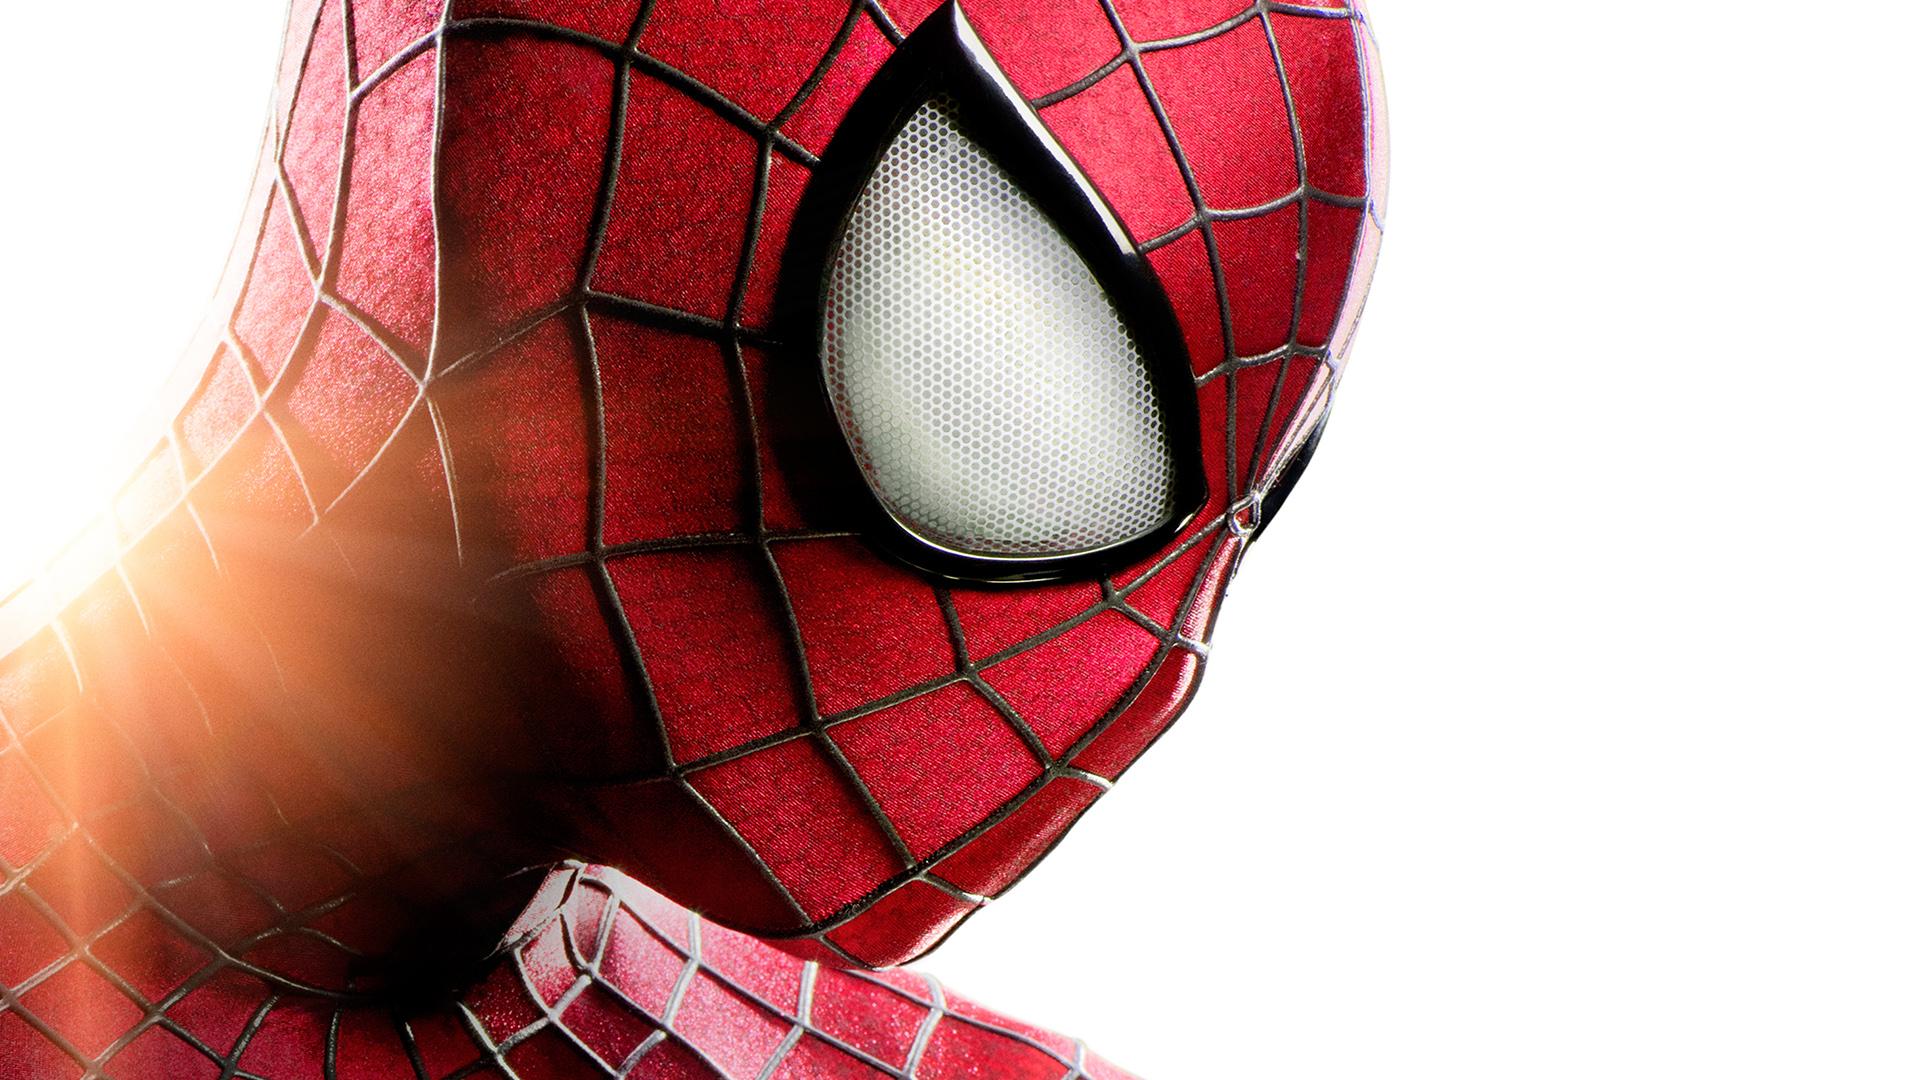 THE AMAZING SPIDER-MAN 2 Spiderman head wallpaper Wallpaper